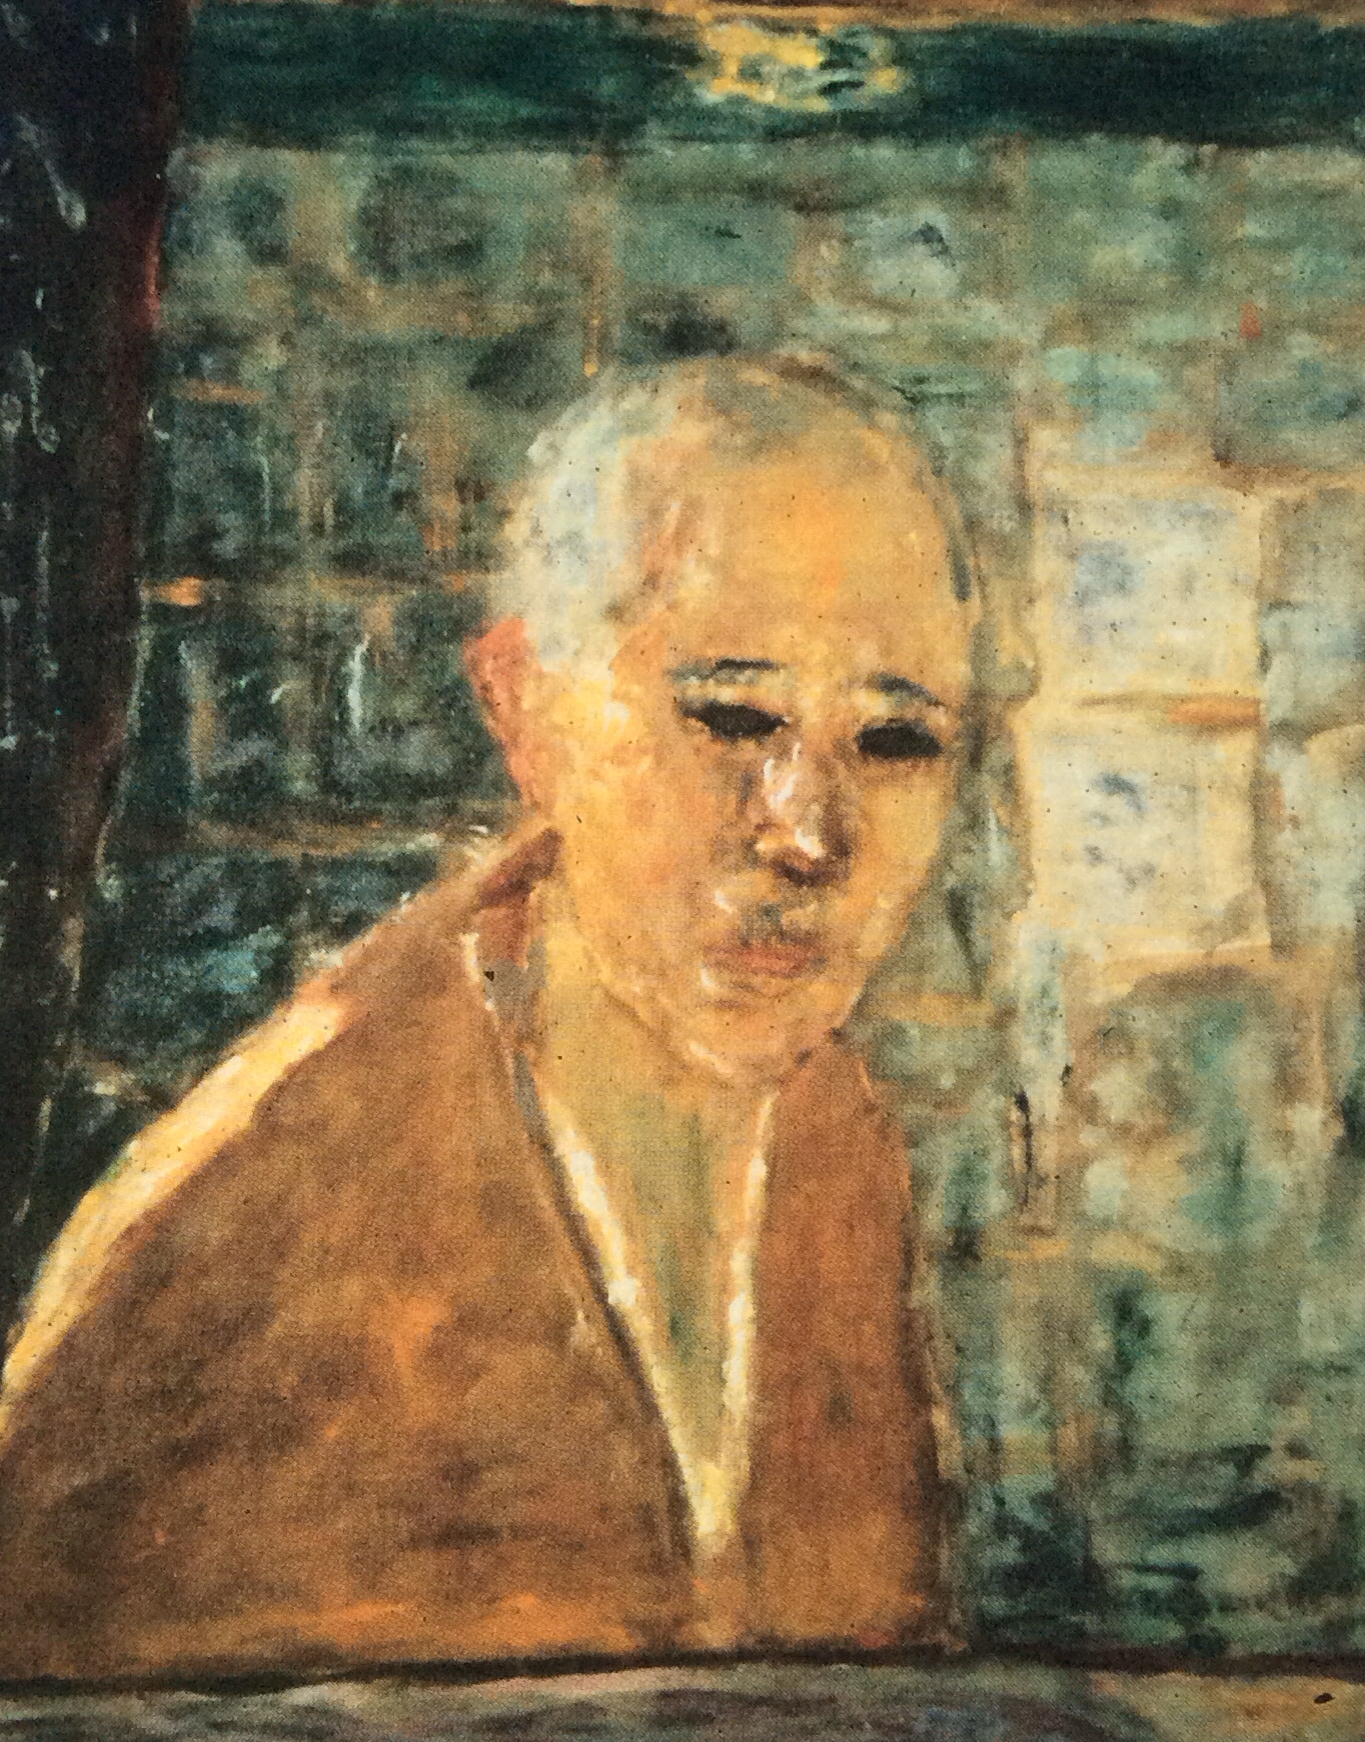 Pierre Bonnard - 3 octobre 1867 - 23 janvier 1947